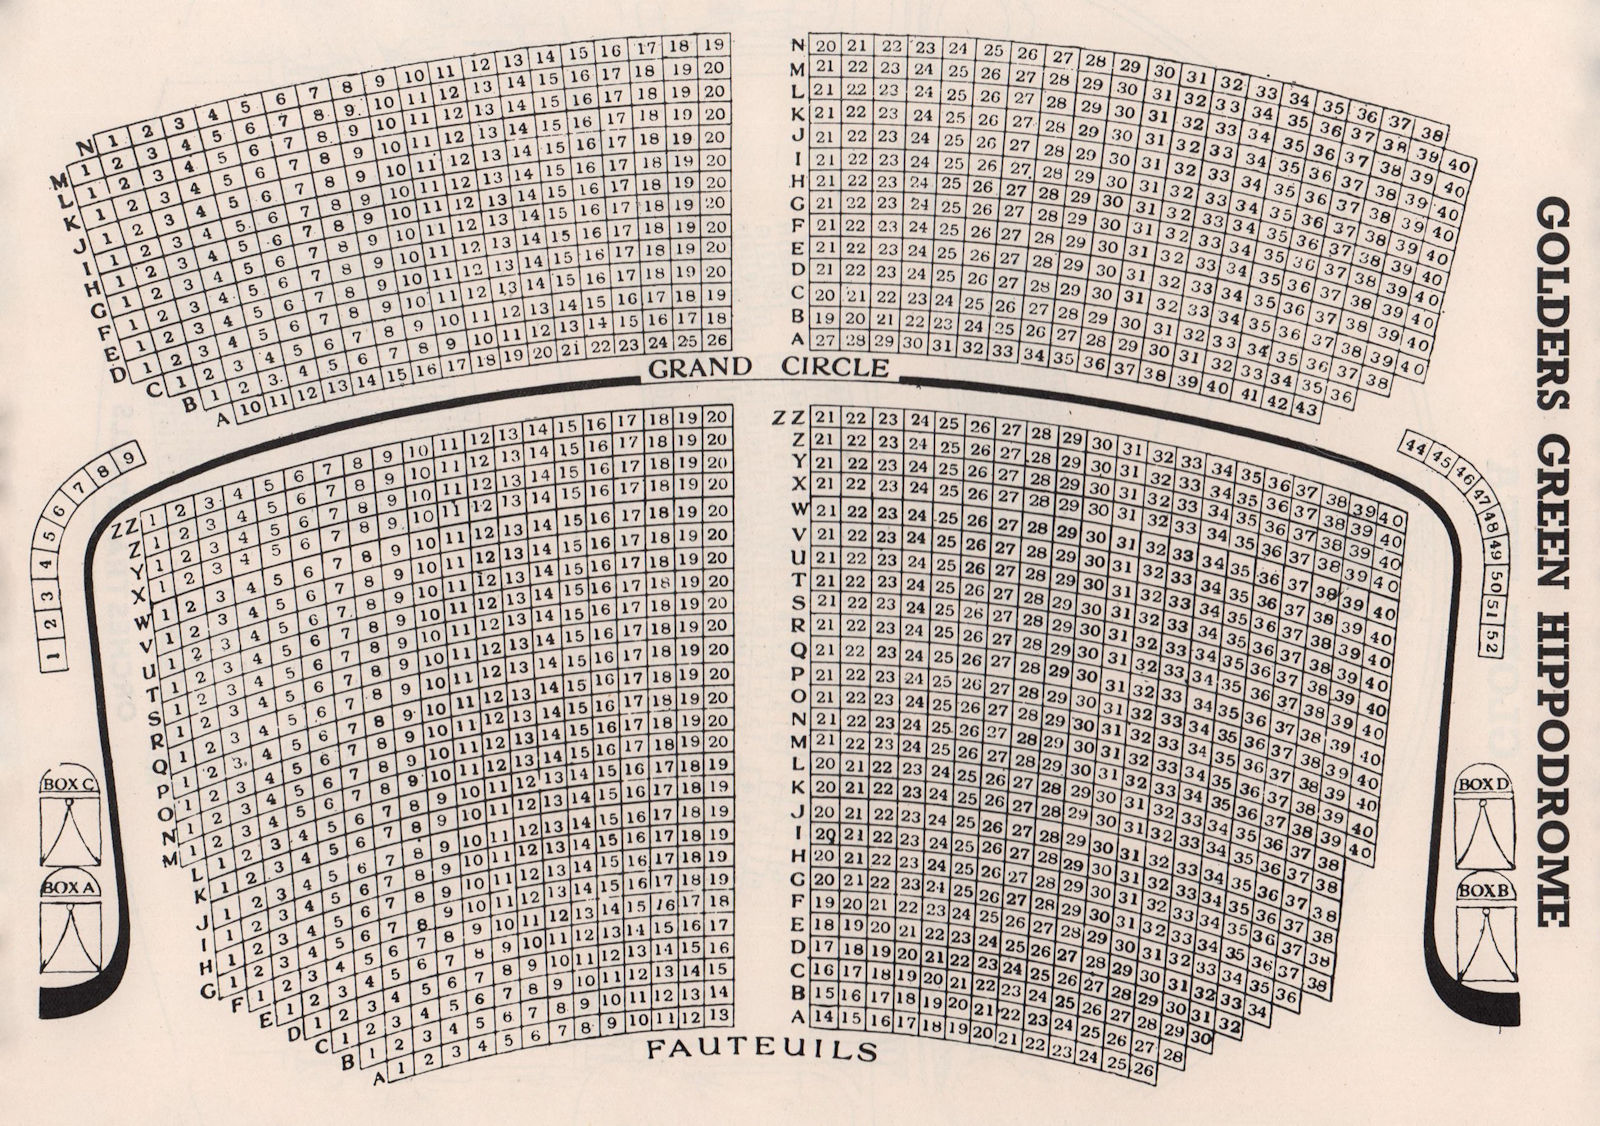 GOLDERS GREEN HIPPODROME vintage seating plan. London. Theatre/Music Hall 1937